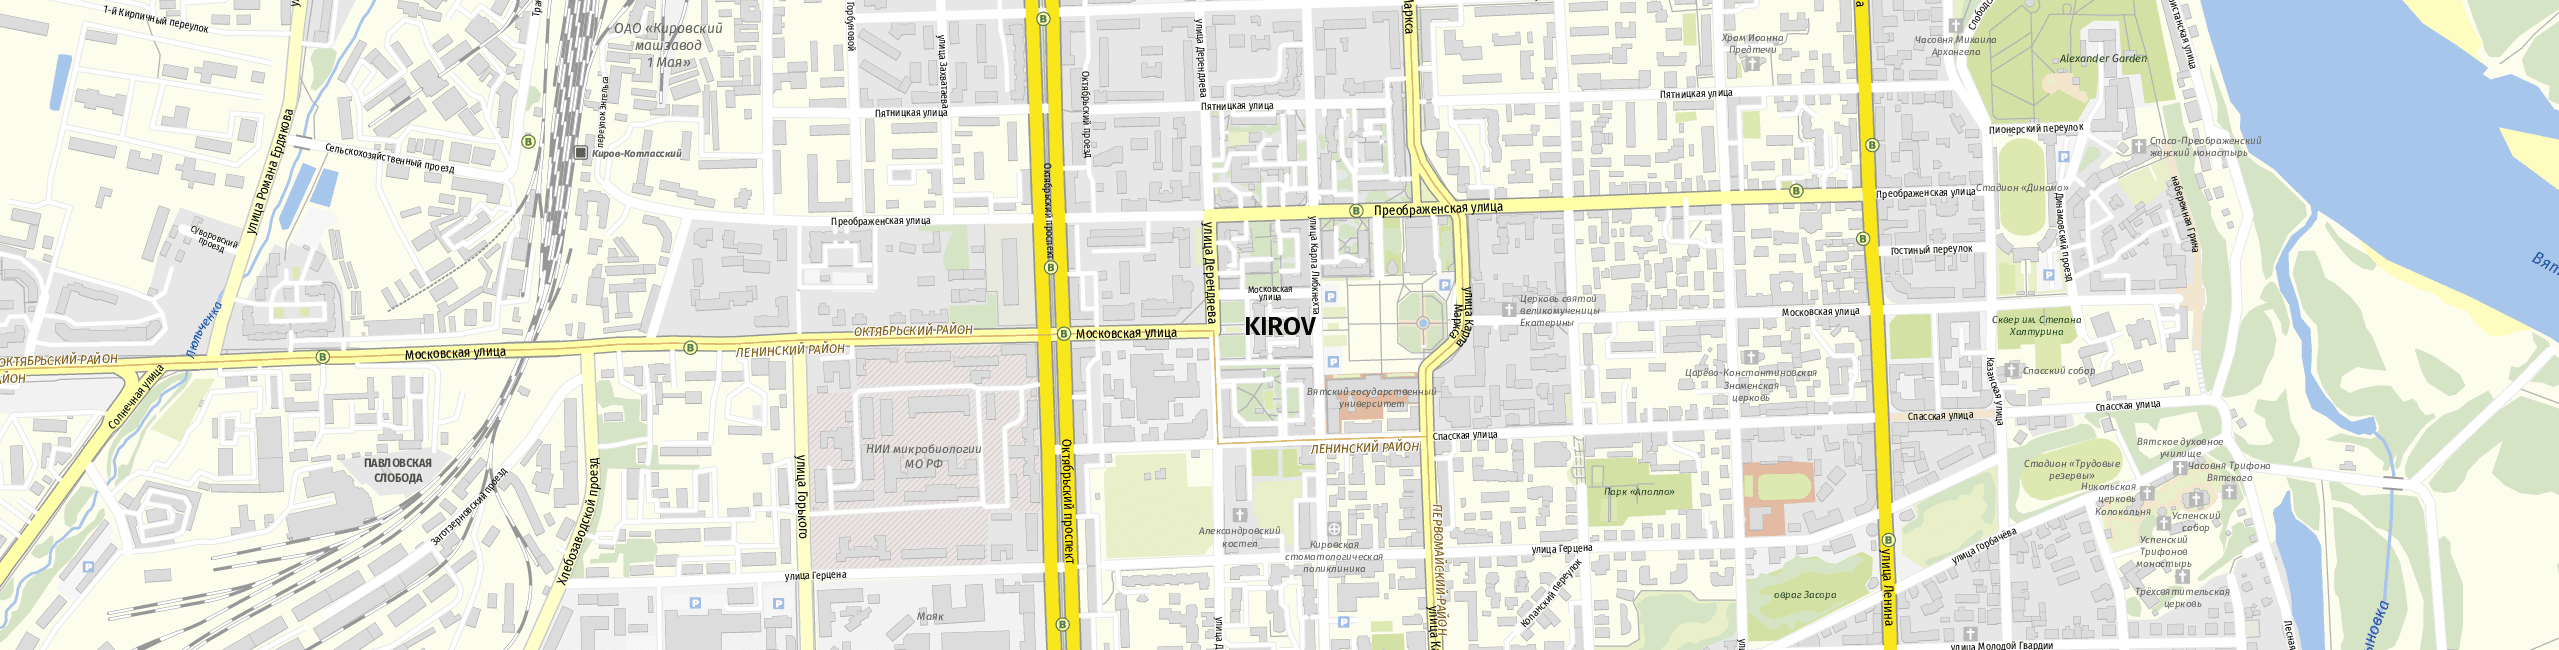 Stadtplan Kirov zum Downloaden.